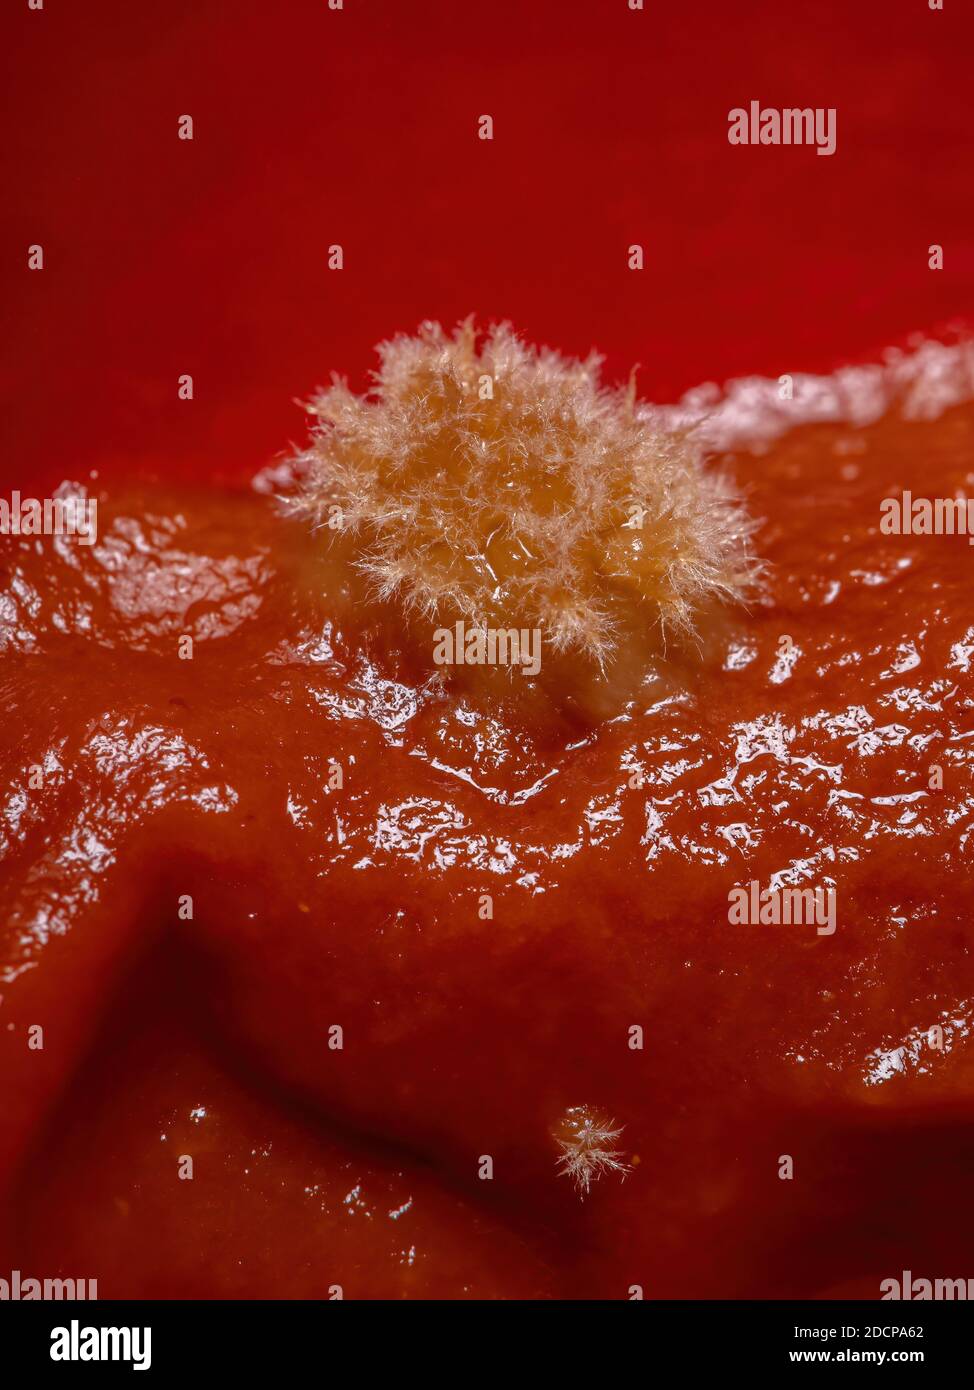 Moldy tomato sauce by fungi Stock Photo